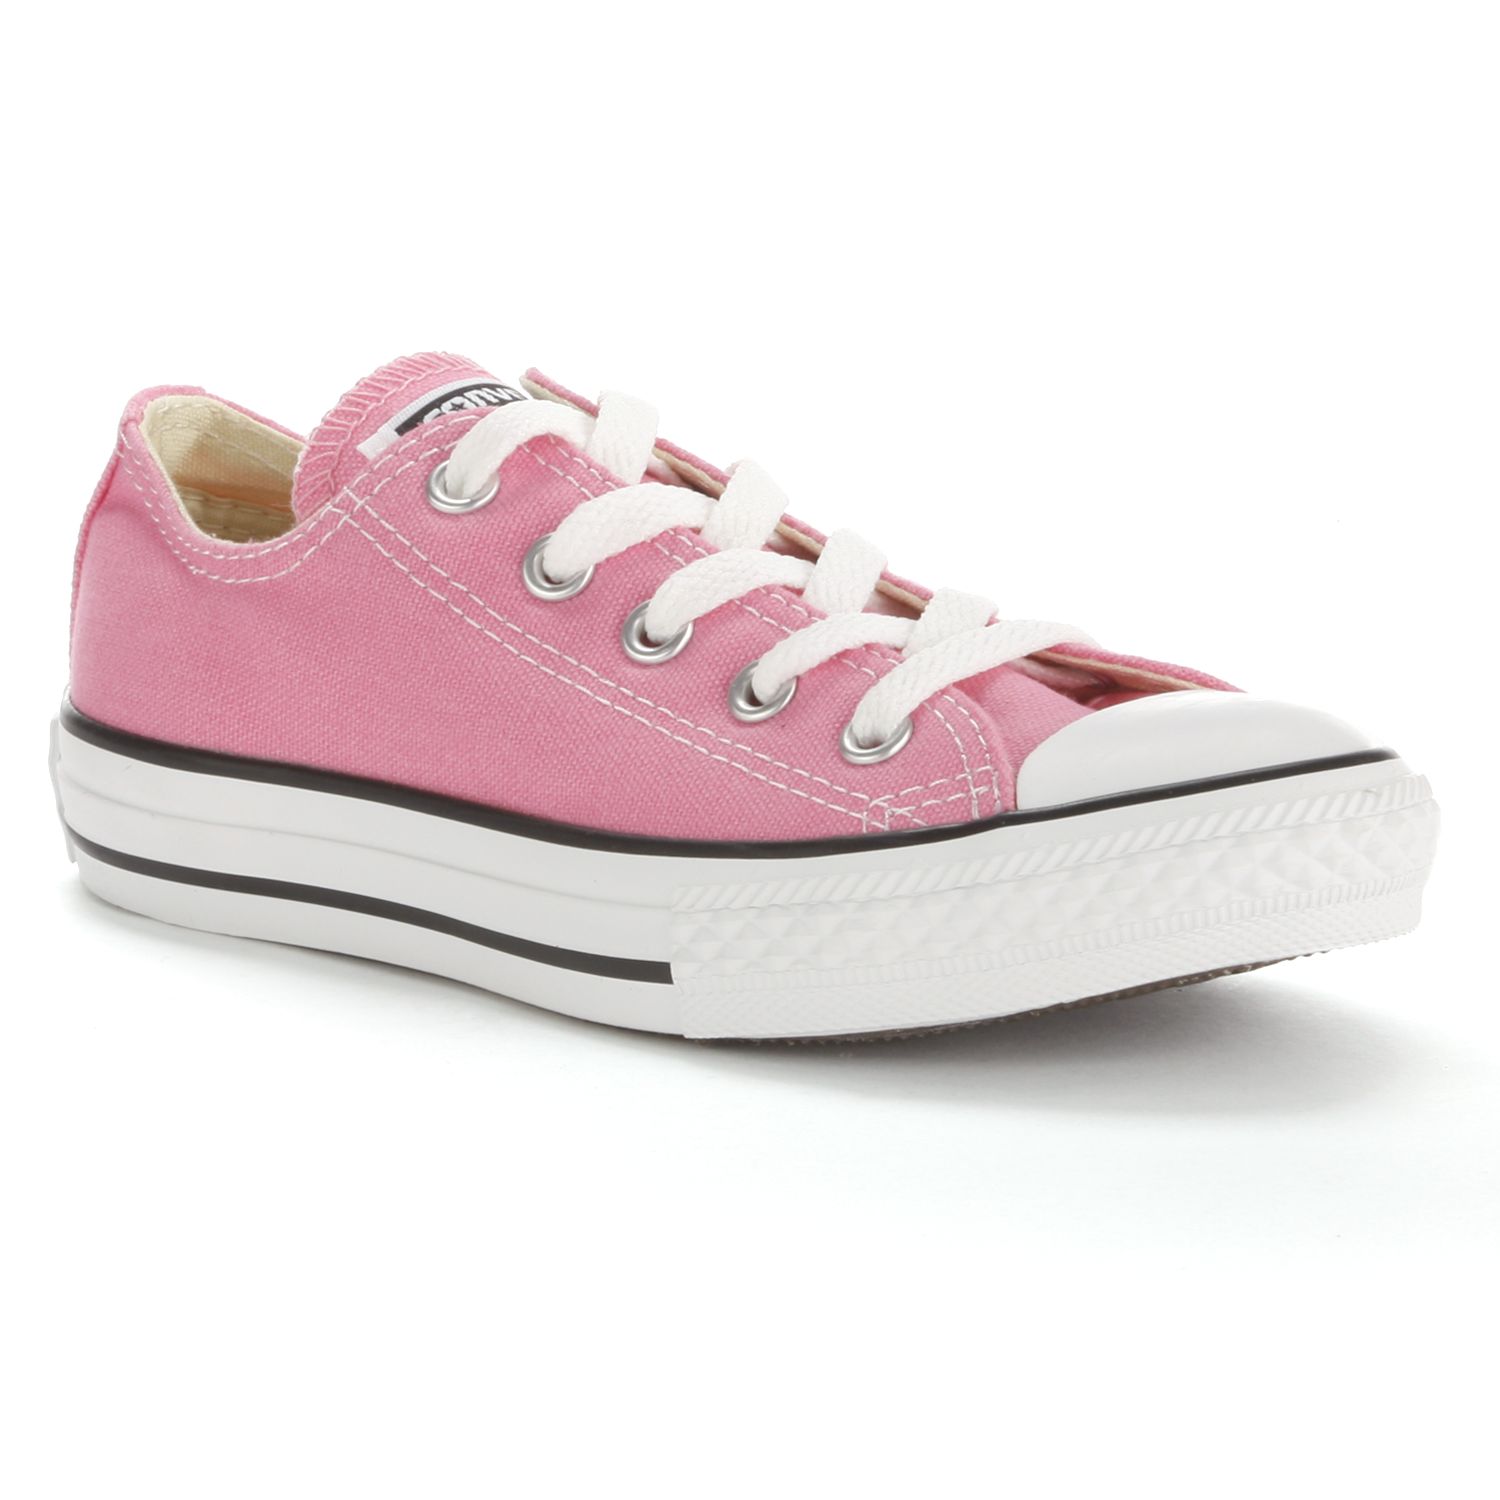 baby pink converse